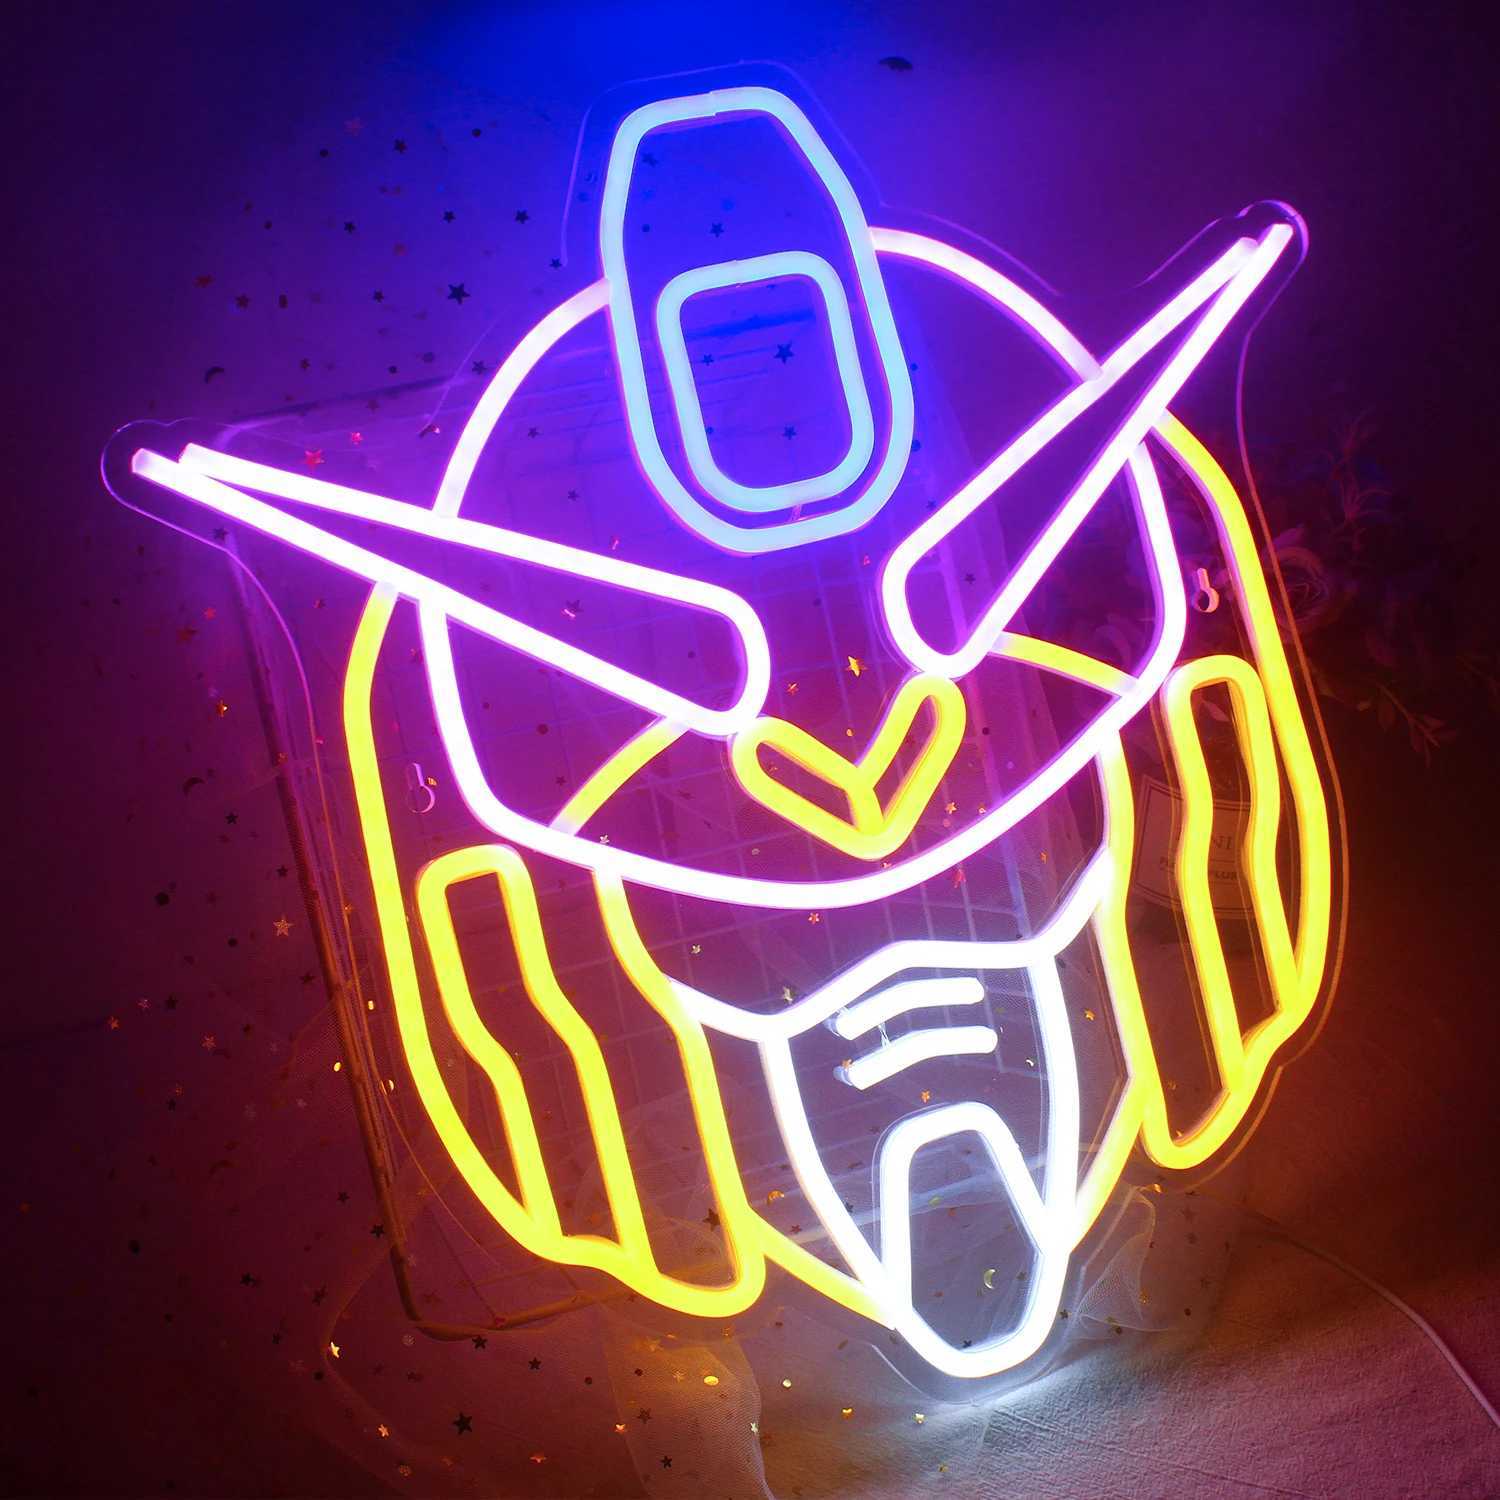 LED Neon znak Ineonlife Transformers Neon Znak LED LIDY LISTY SYPIALNE